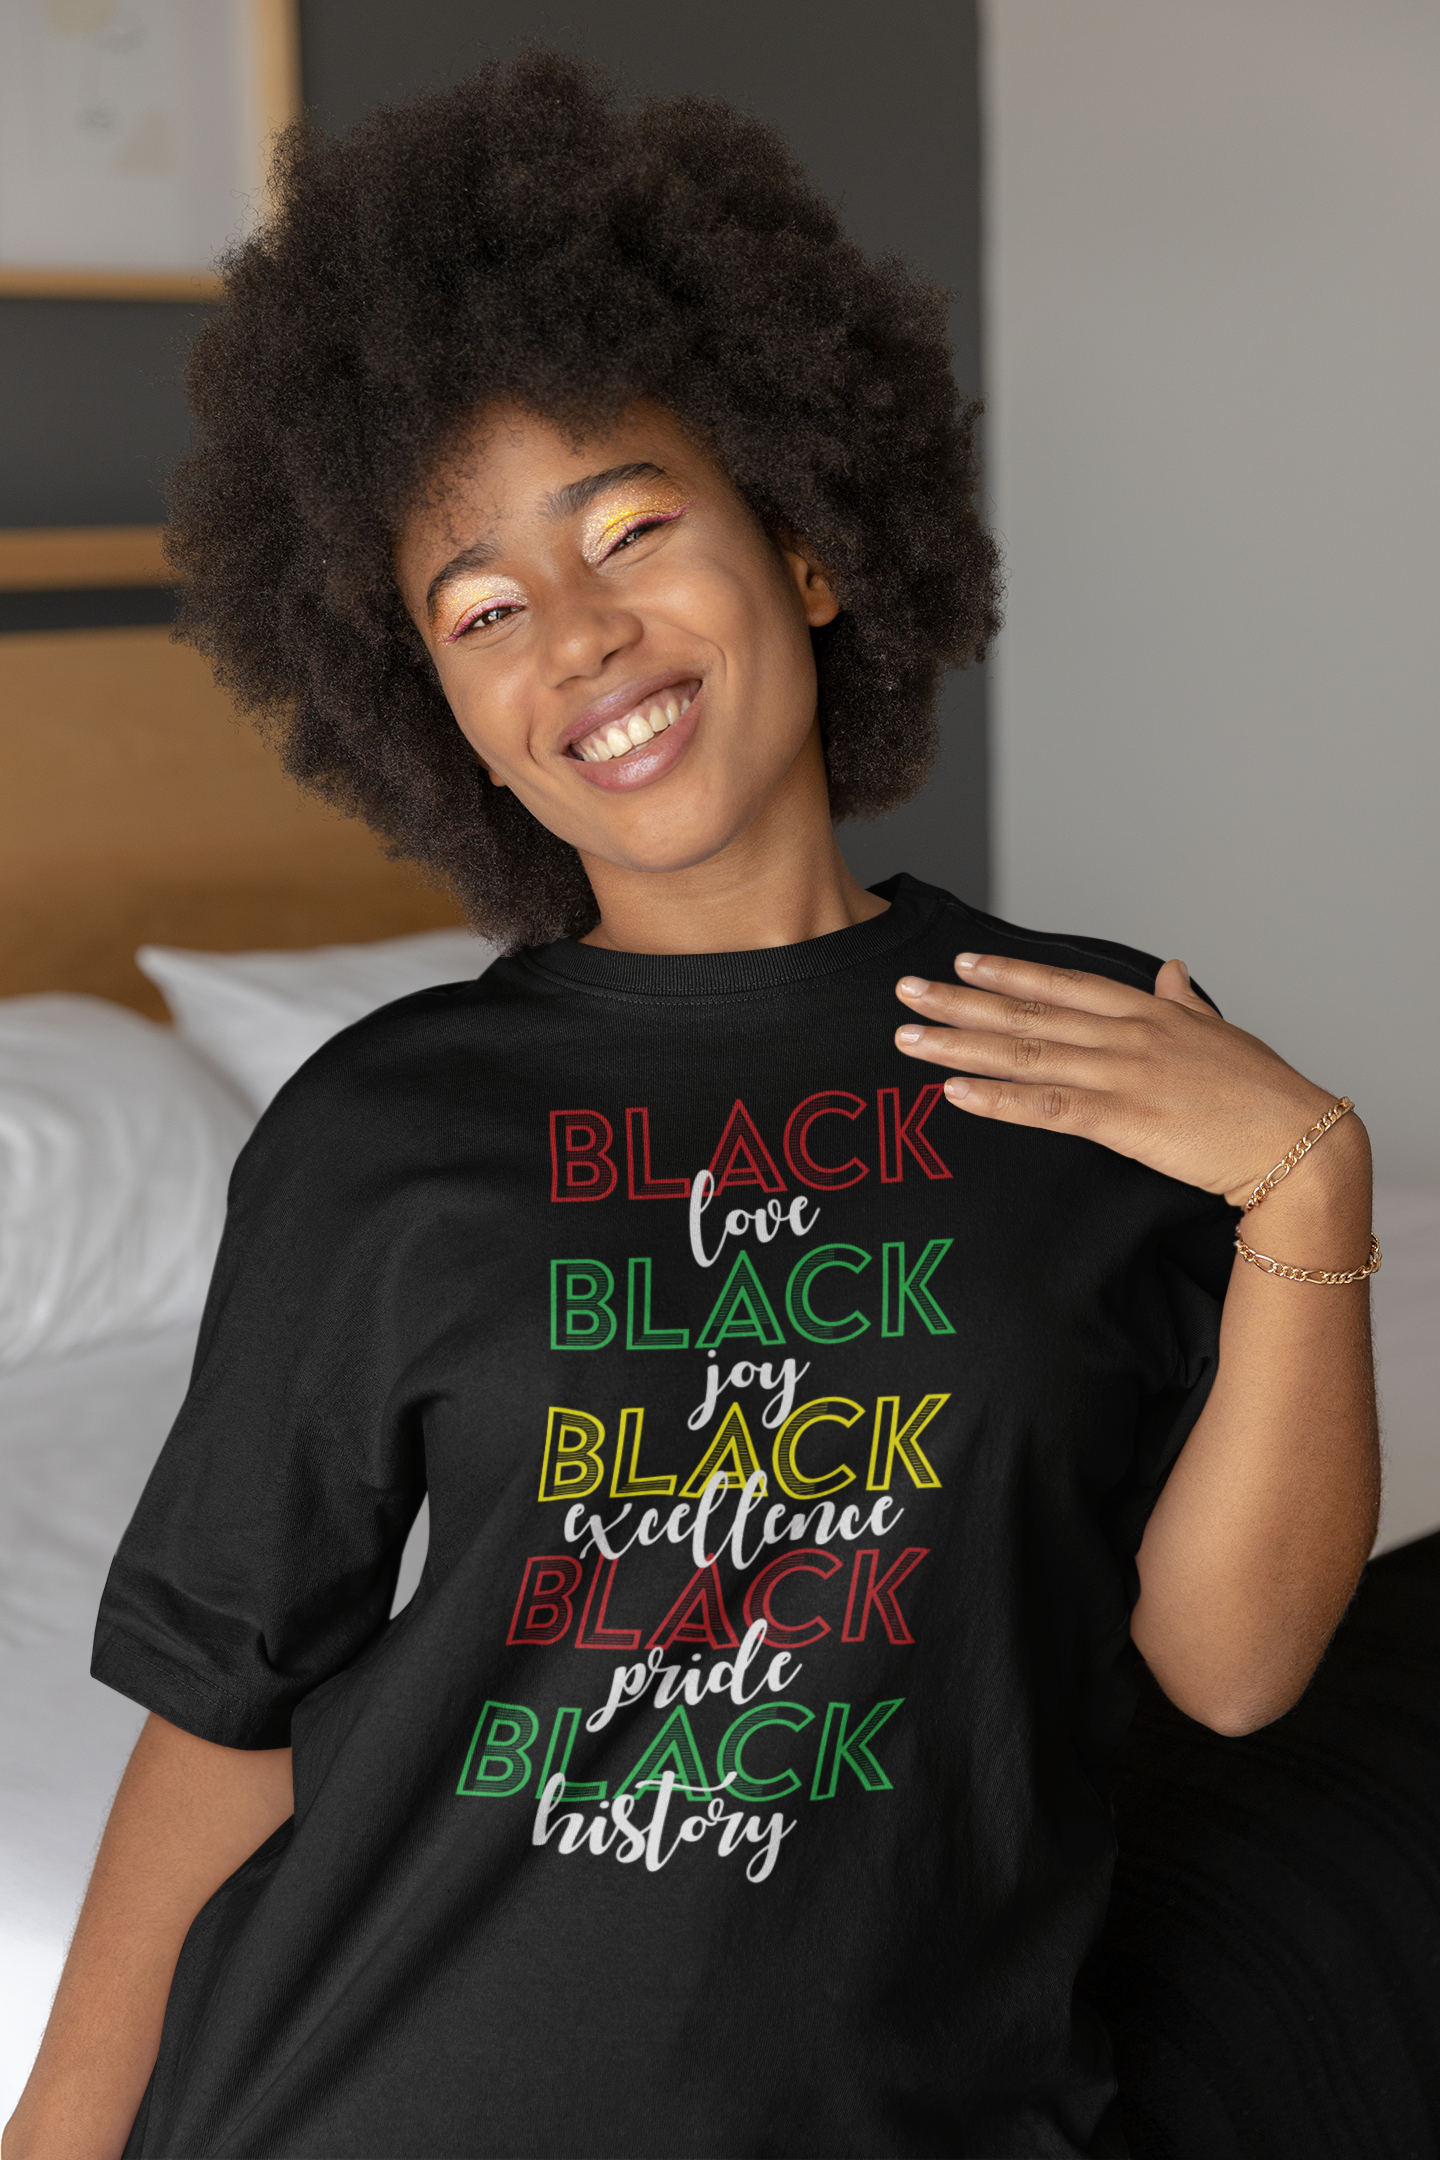 Black History Every Day T-Shirt - Melanin Is Life